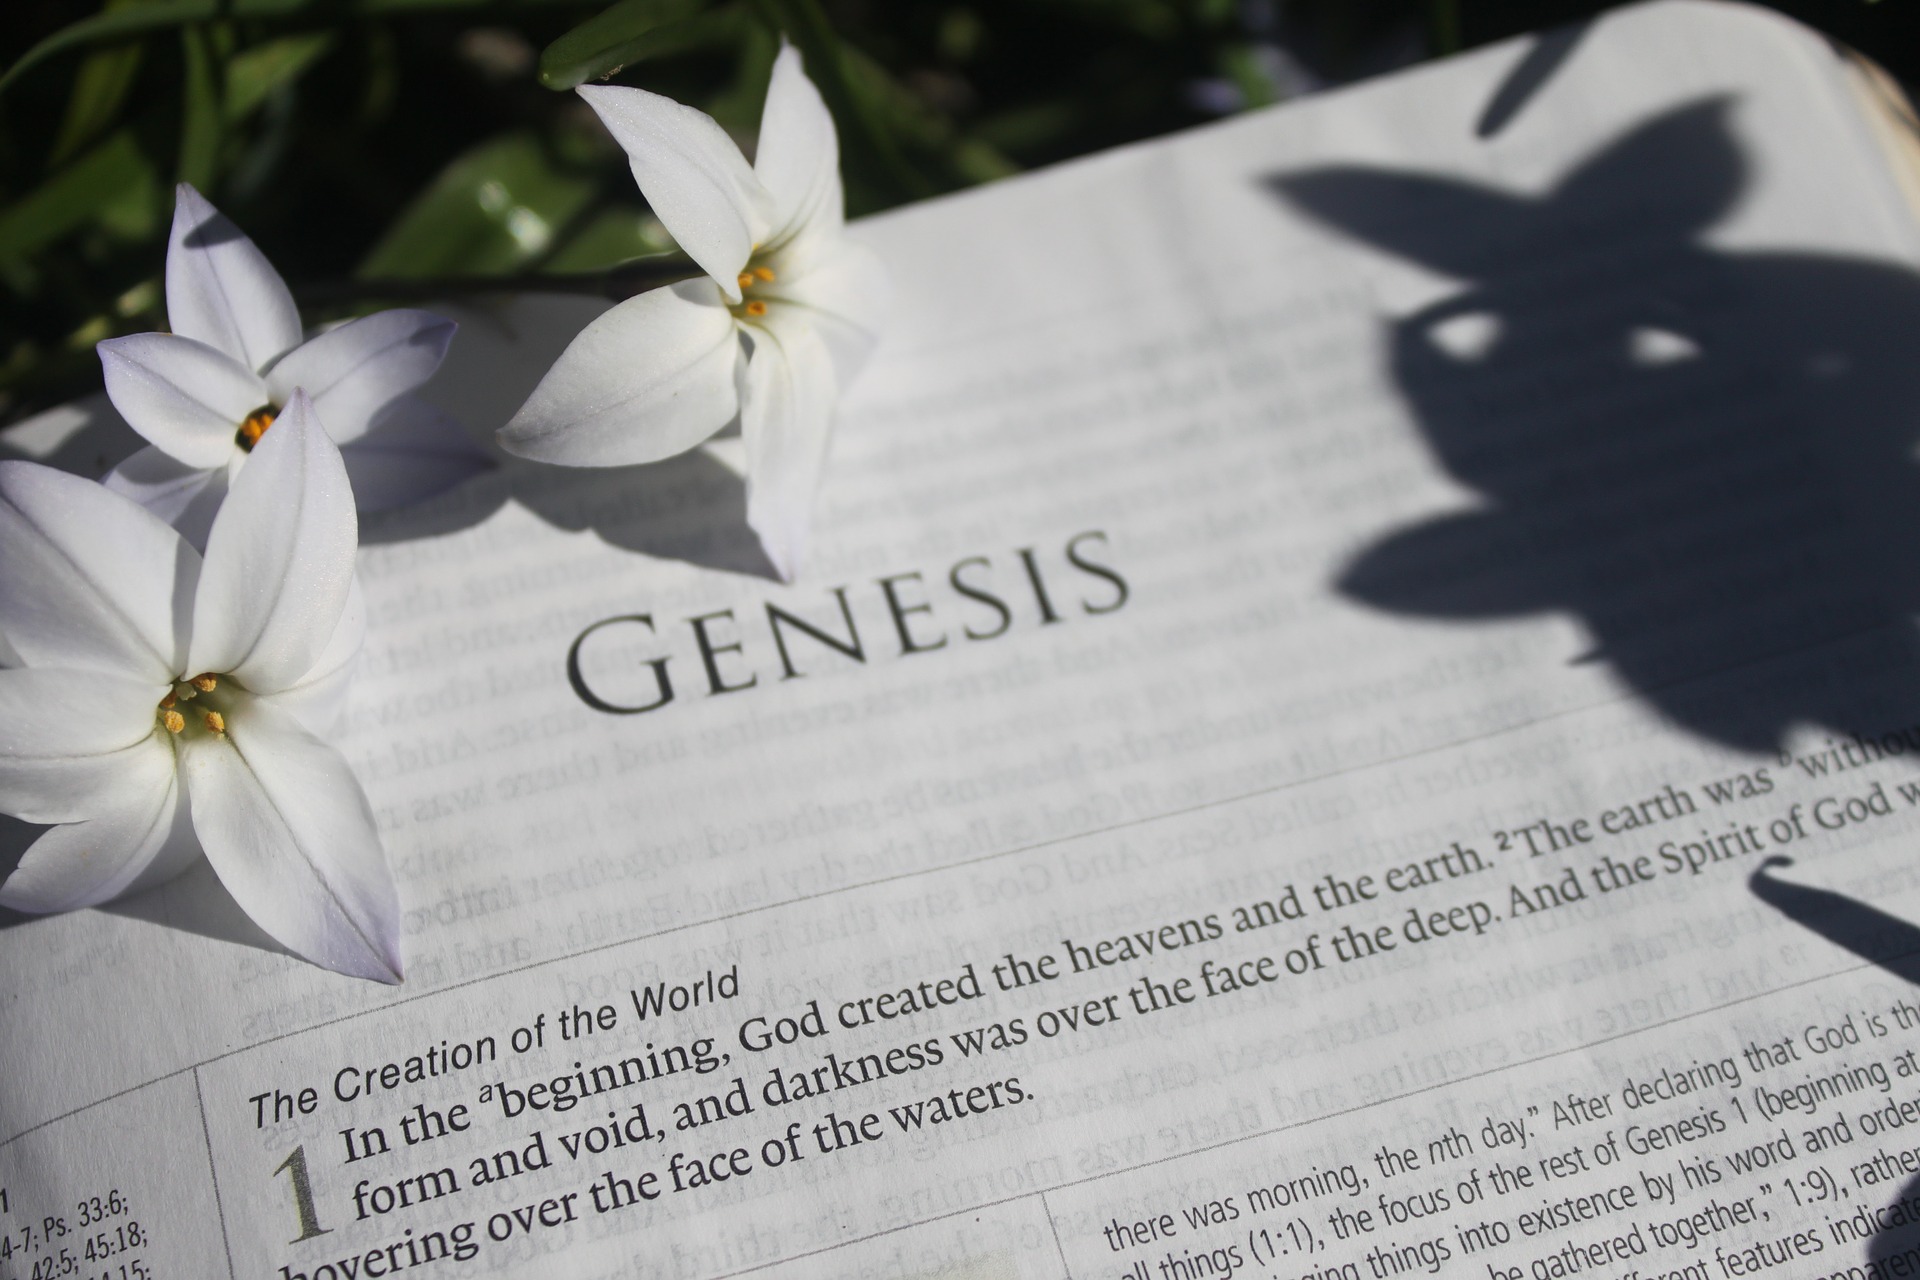 book of Genesis